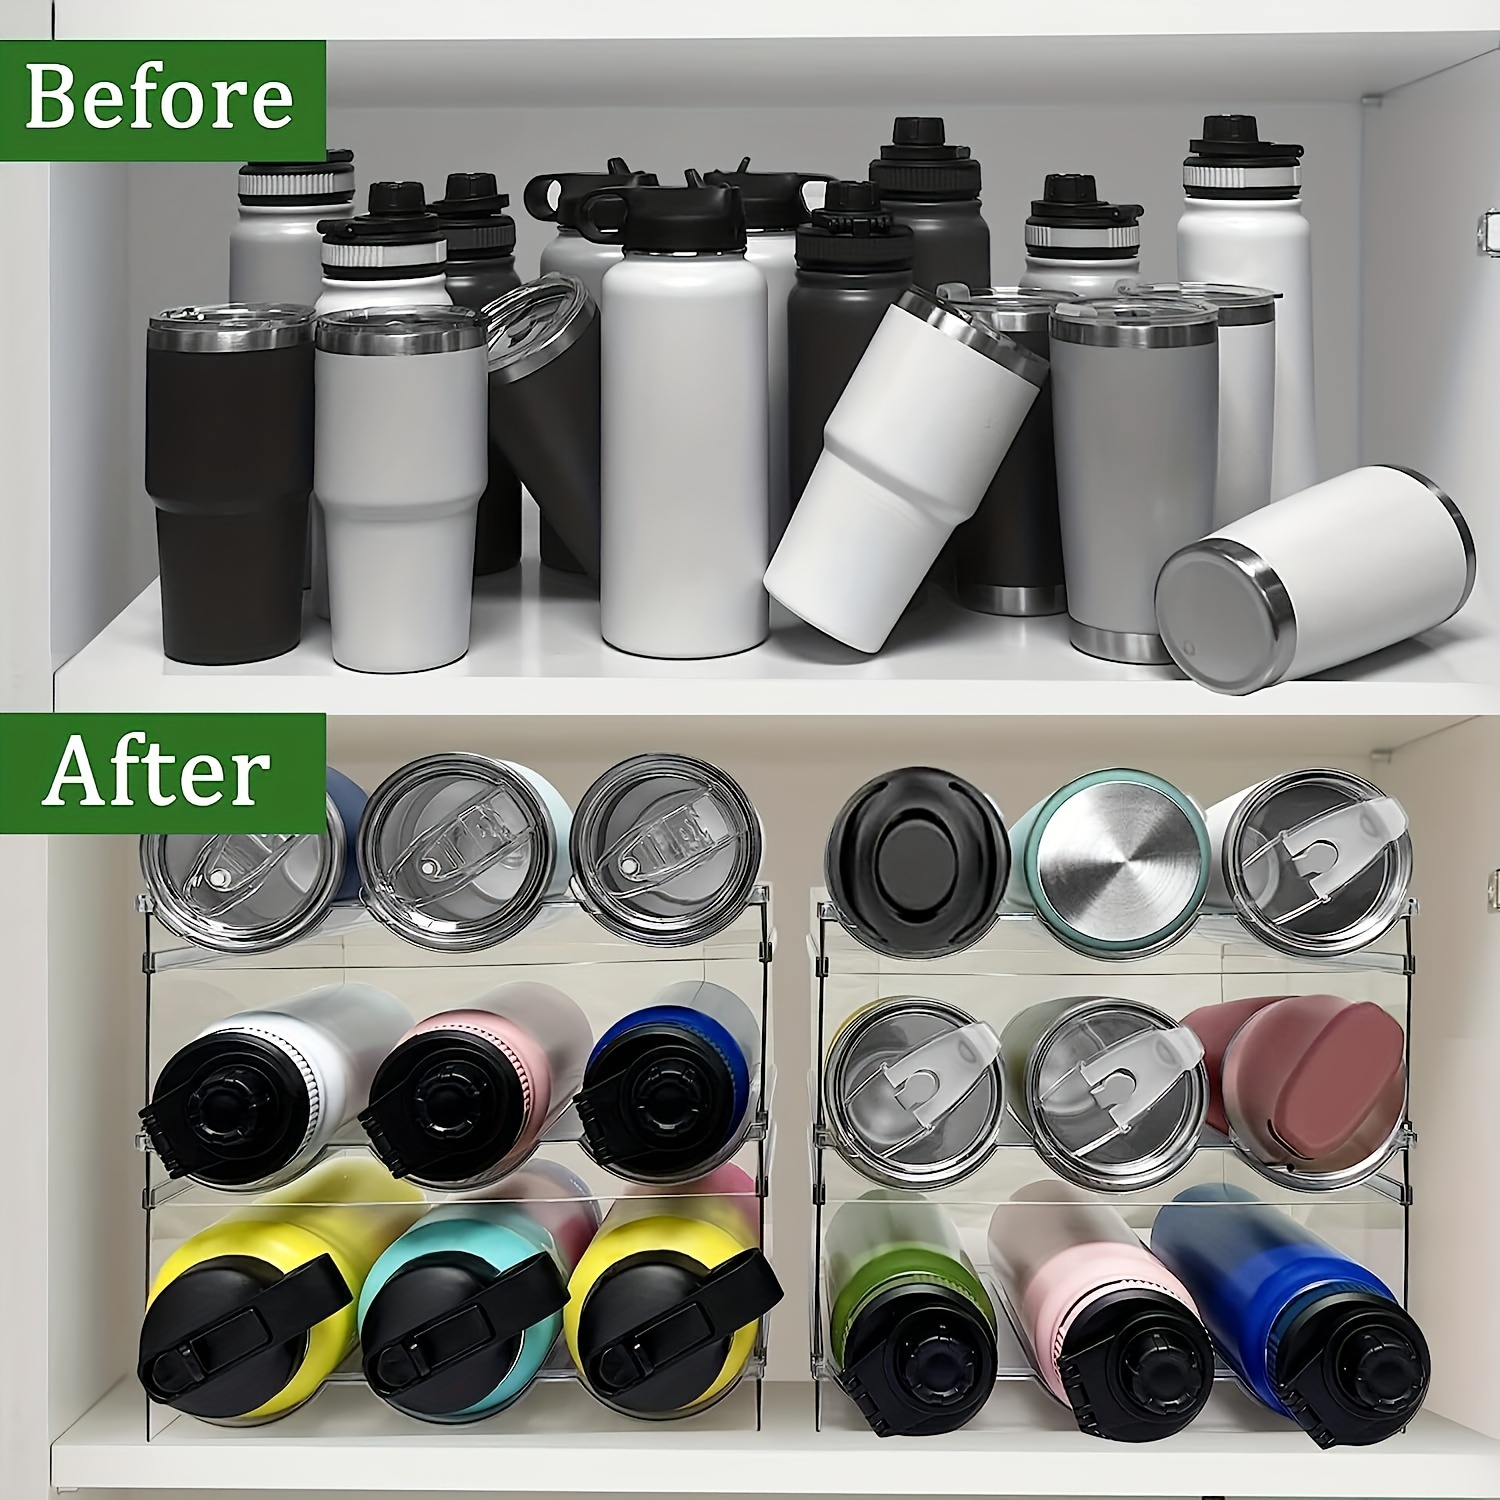  iDesign Recycled Water Bottle Organizer Bin for Kitchen,  Basement, Garage Fridge, Set of 1, Clear Plastic : Home & Kitchen